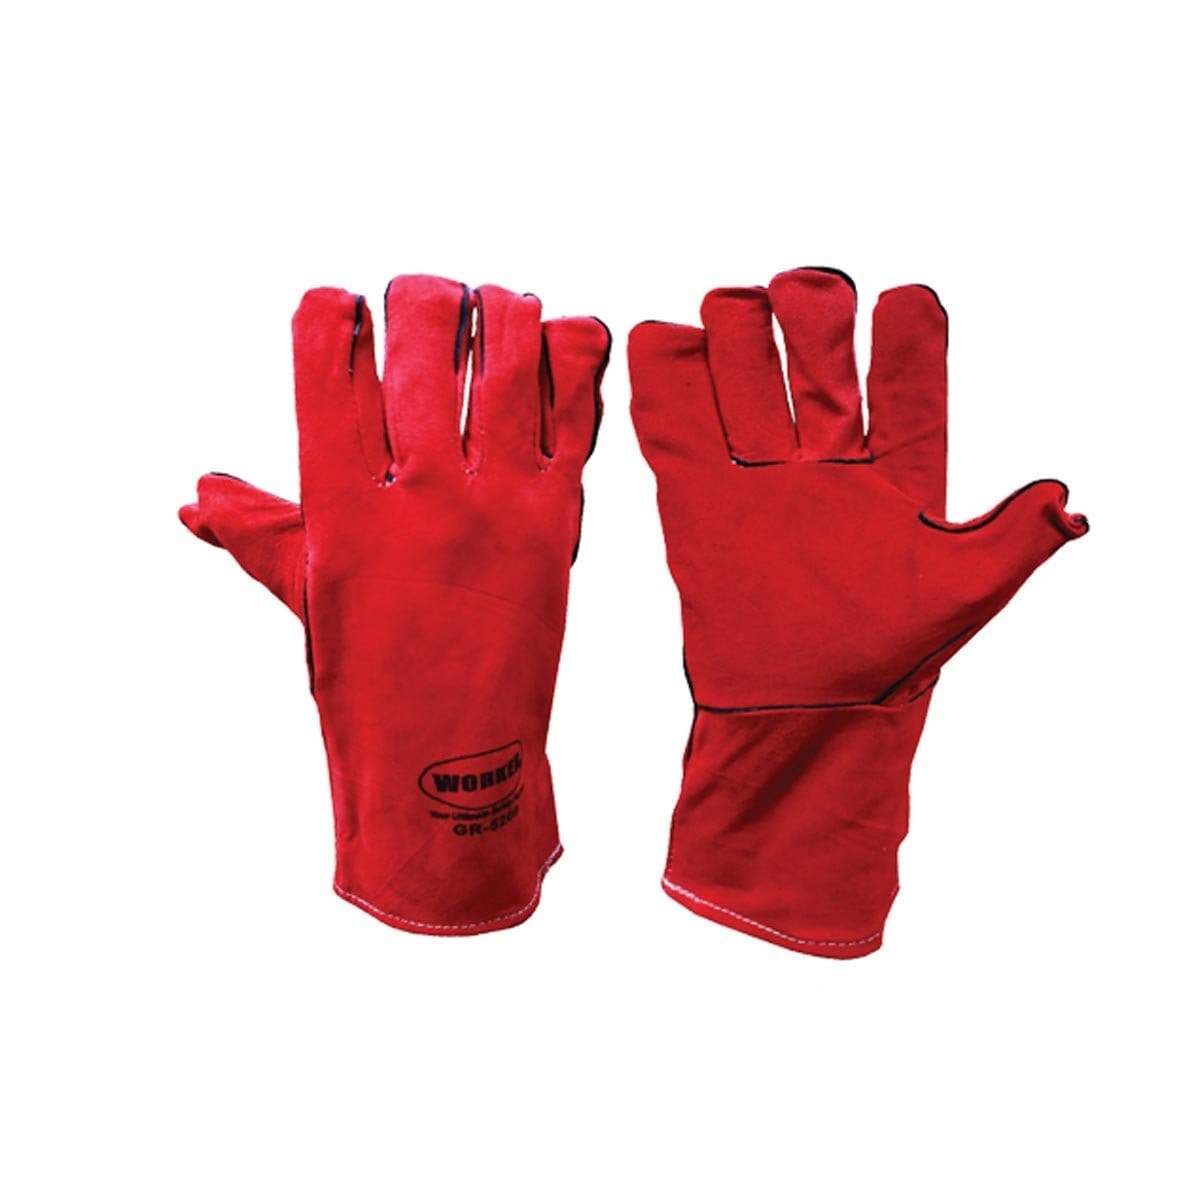 WORKER Red Welding Gloves GR5200